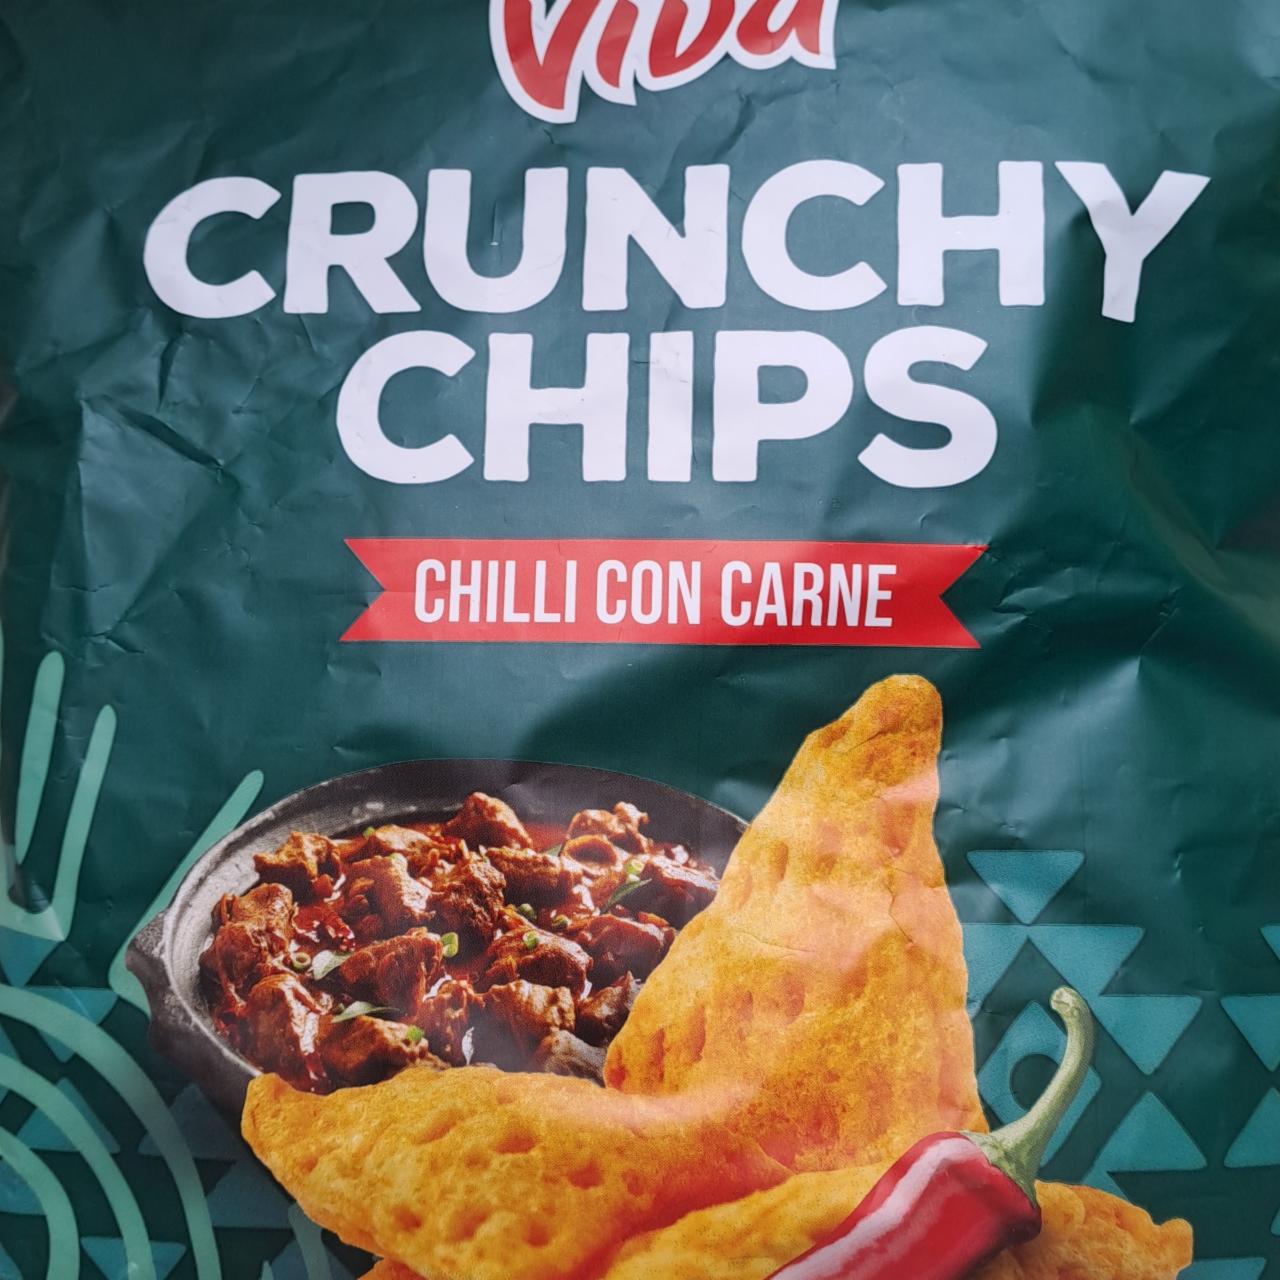 Fotografie - Crunchy chips Chilli con carne Viva